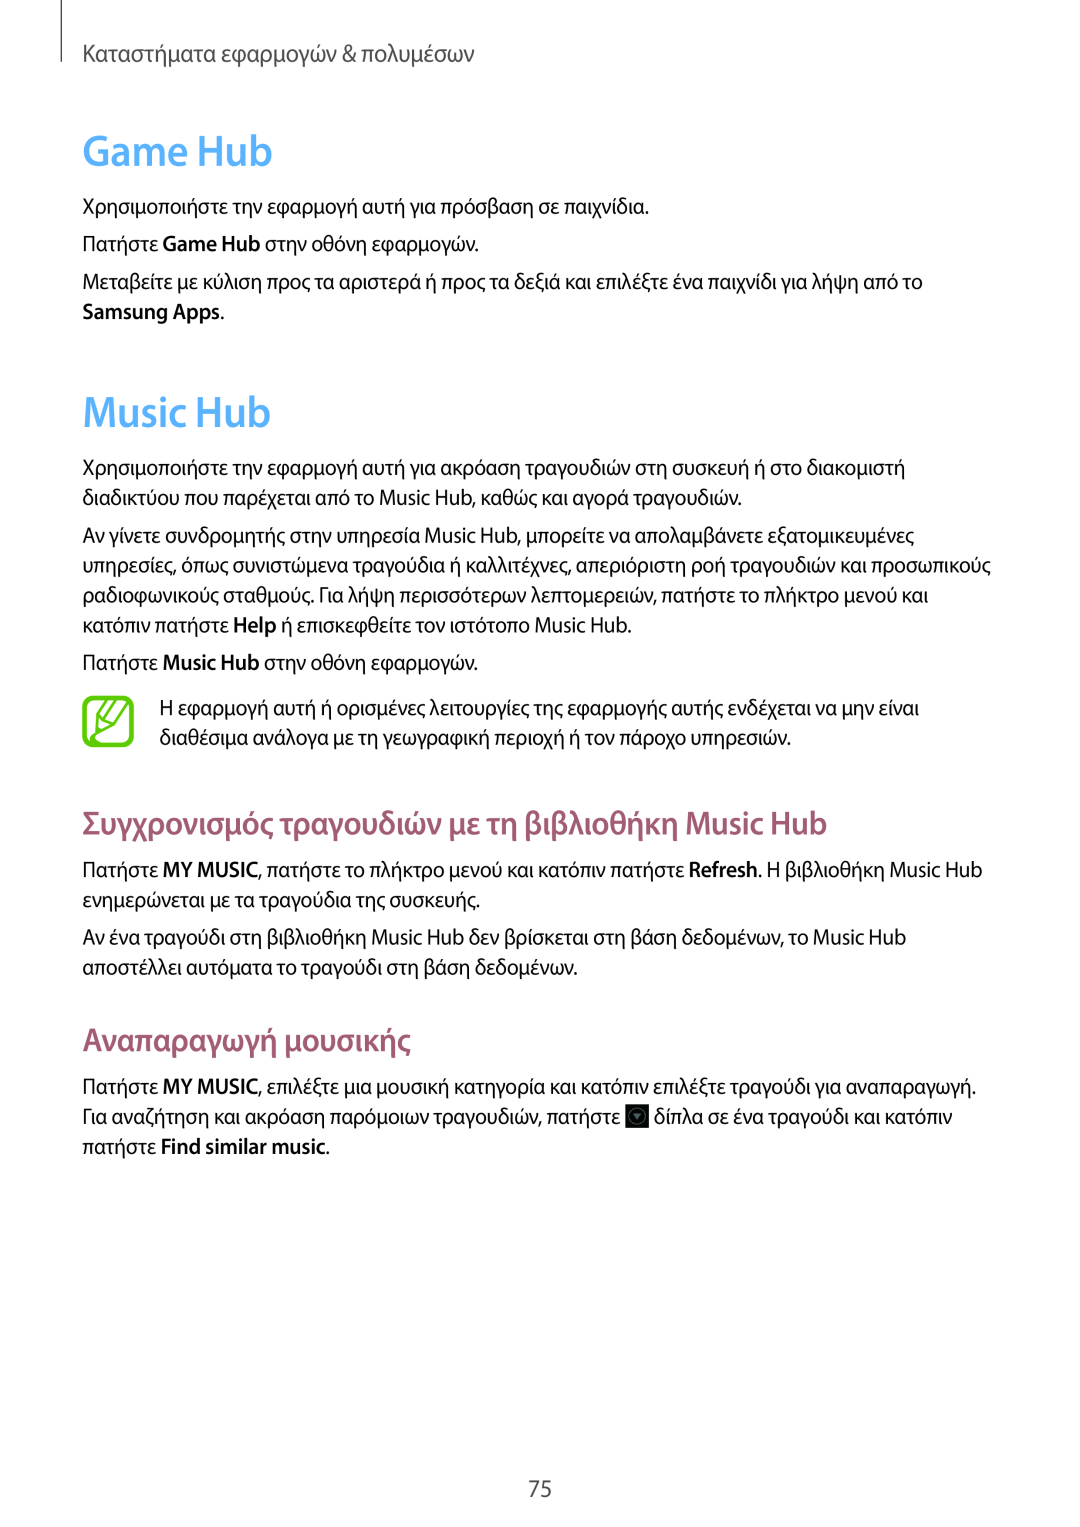 Samsung GT-S7710TAAVGR manual Game Hub, Συγχρονισμός τραγουδιών με τη βιβλιοθήκη Music Hub, Αναπαραγωγή μουσικής 